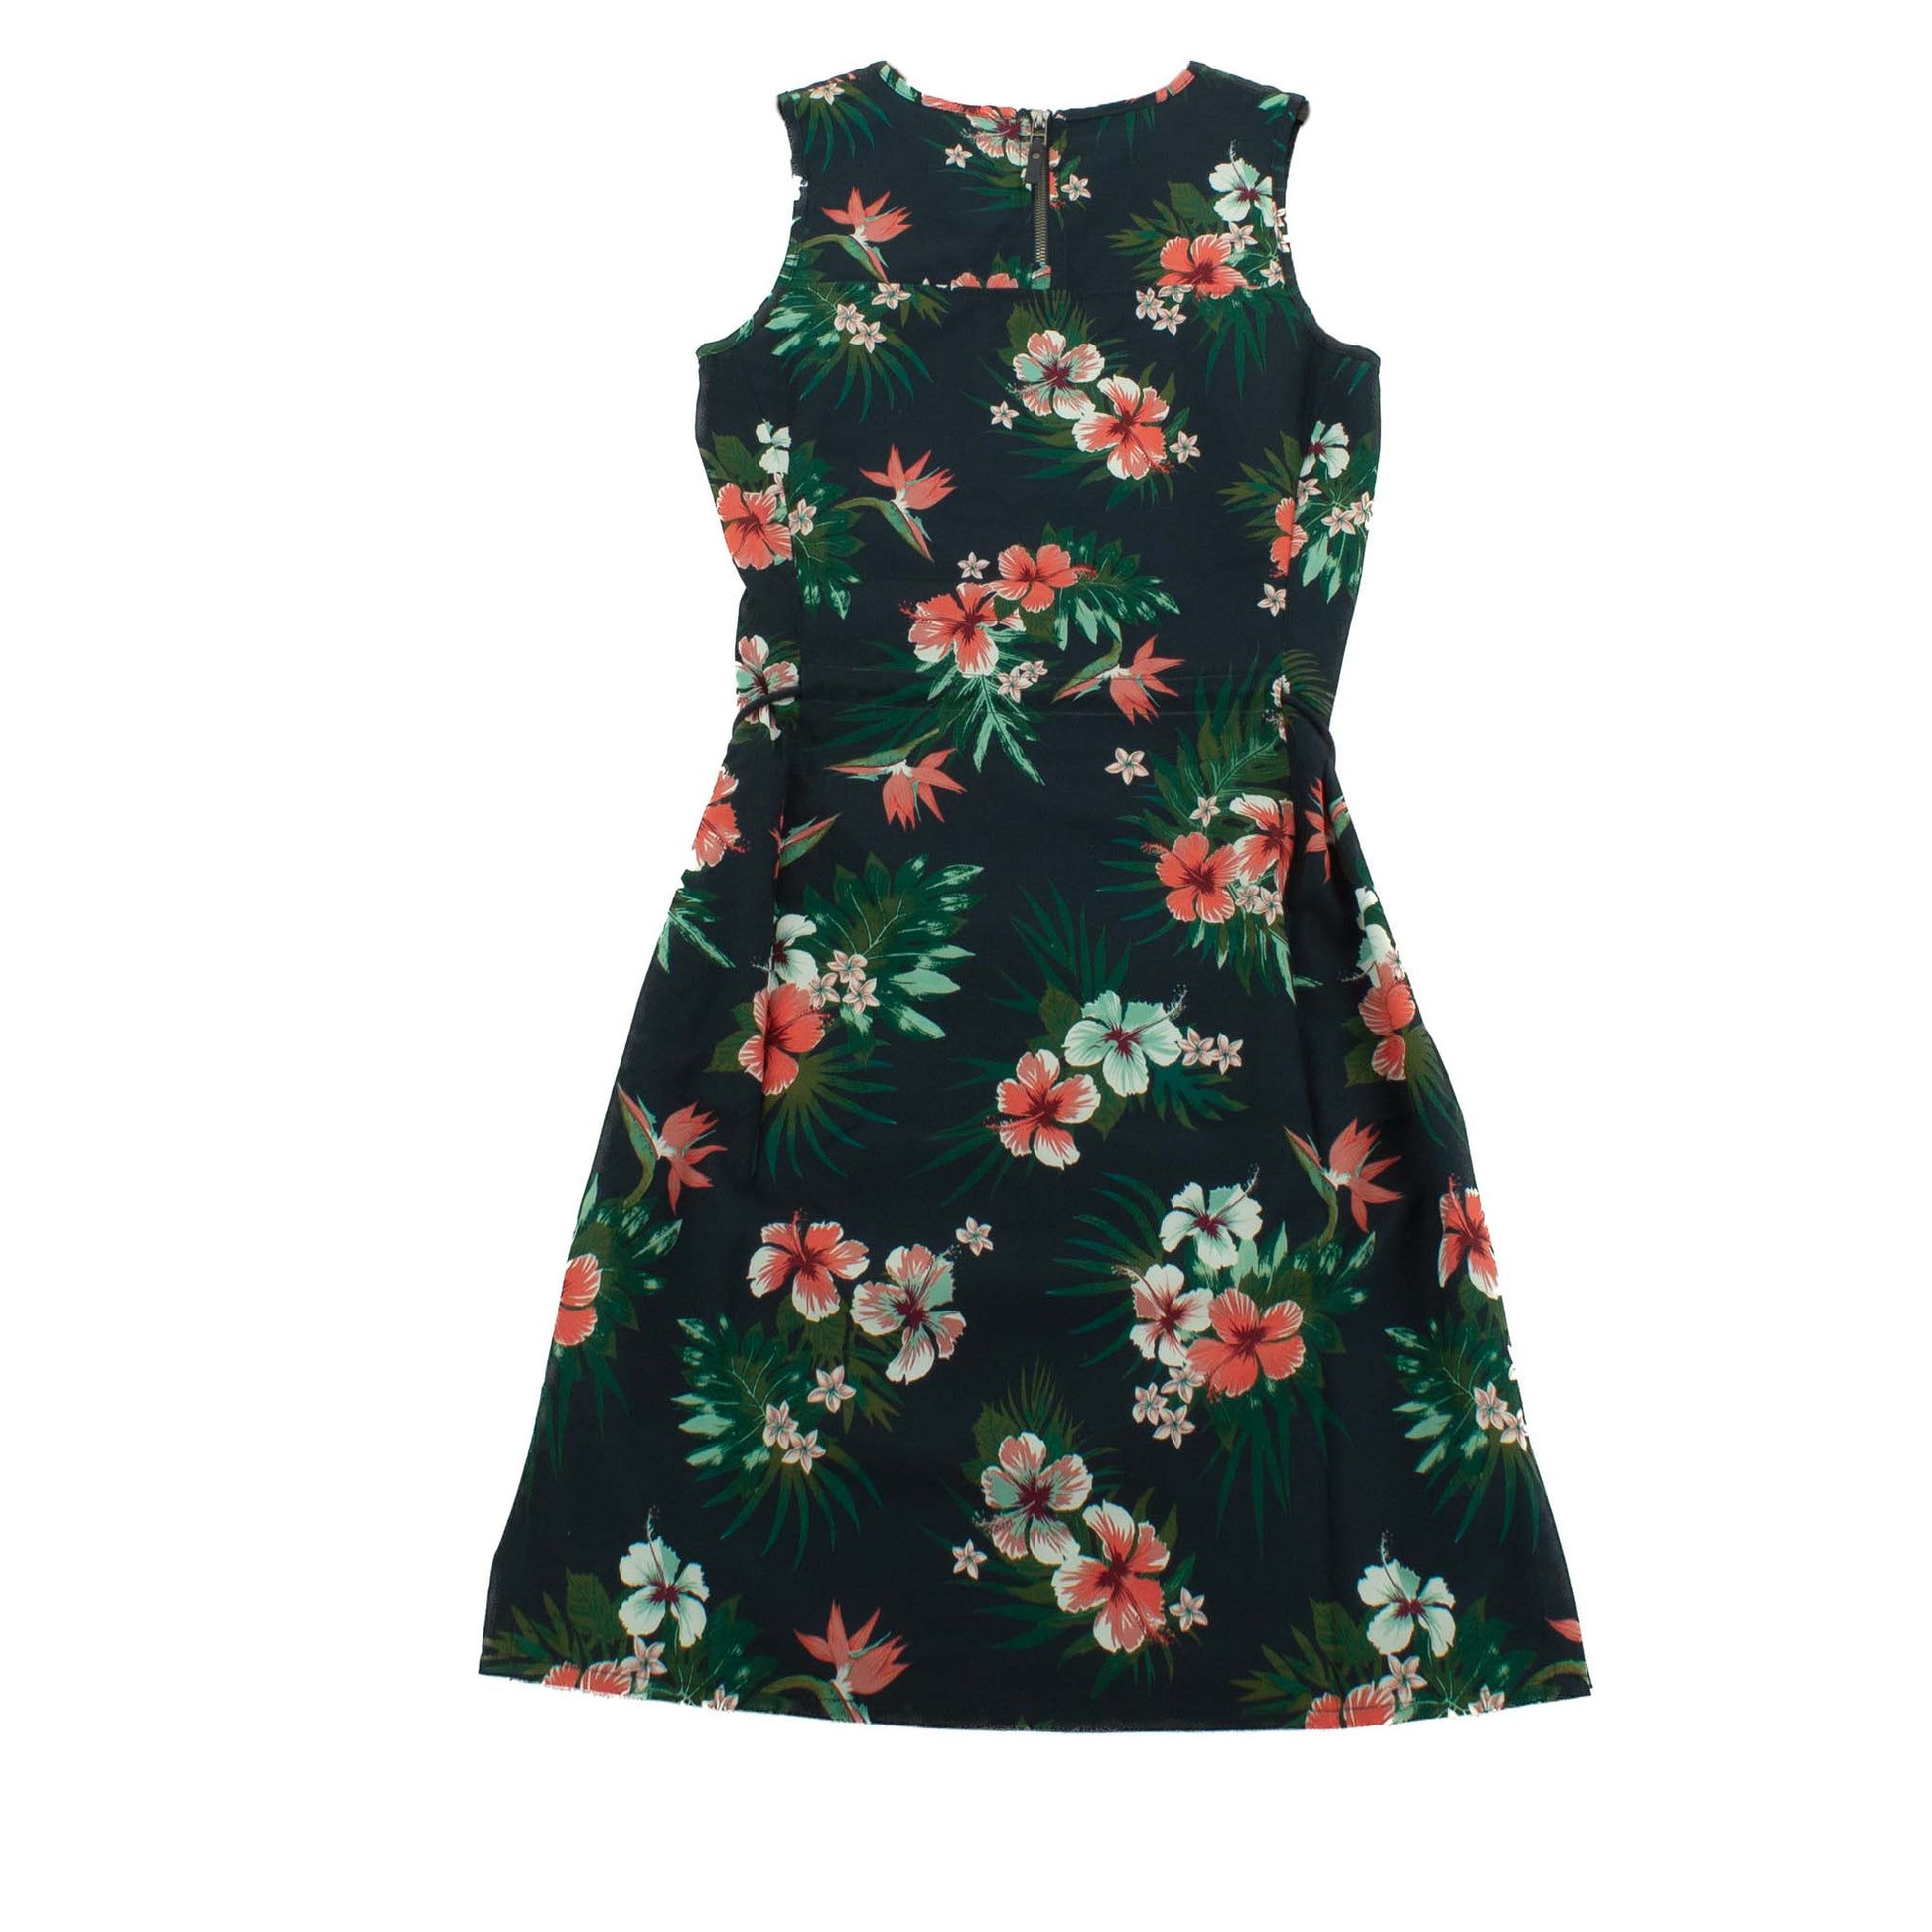 Jack Wolfskin Tioga Road Tropical Print Dress Damen Kleid Sommerkleid 5019351-7775-2